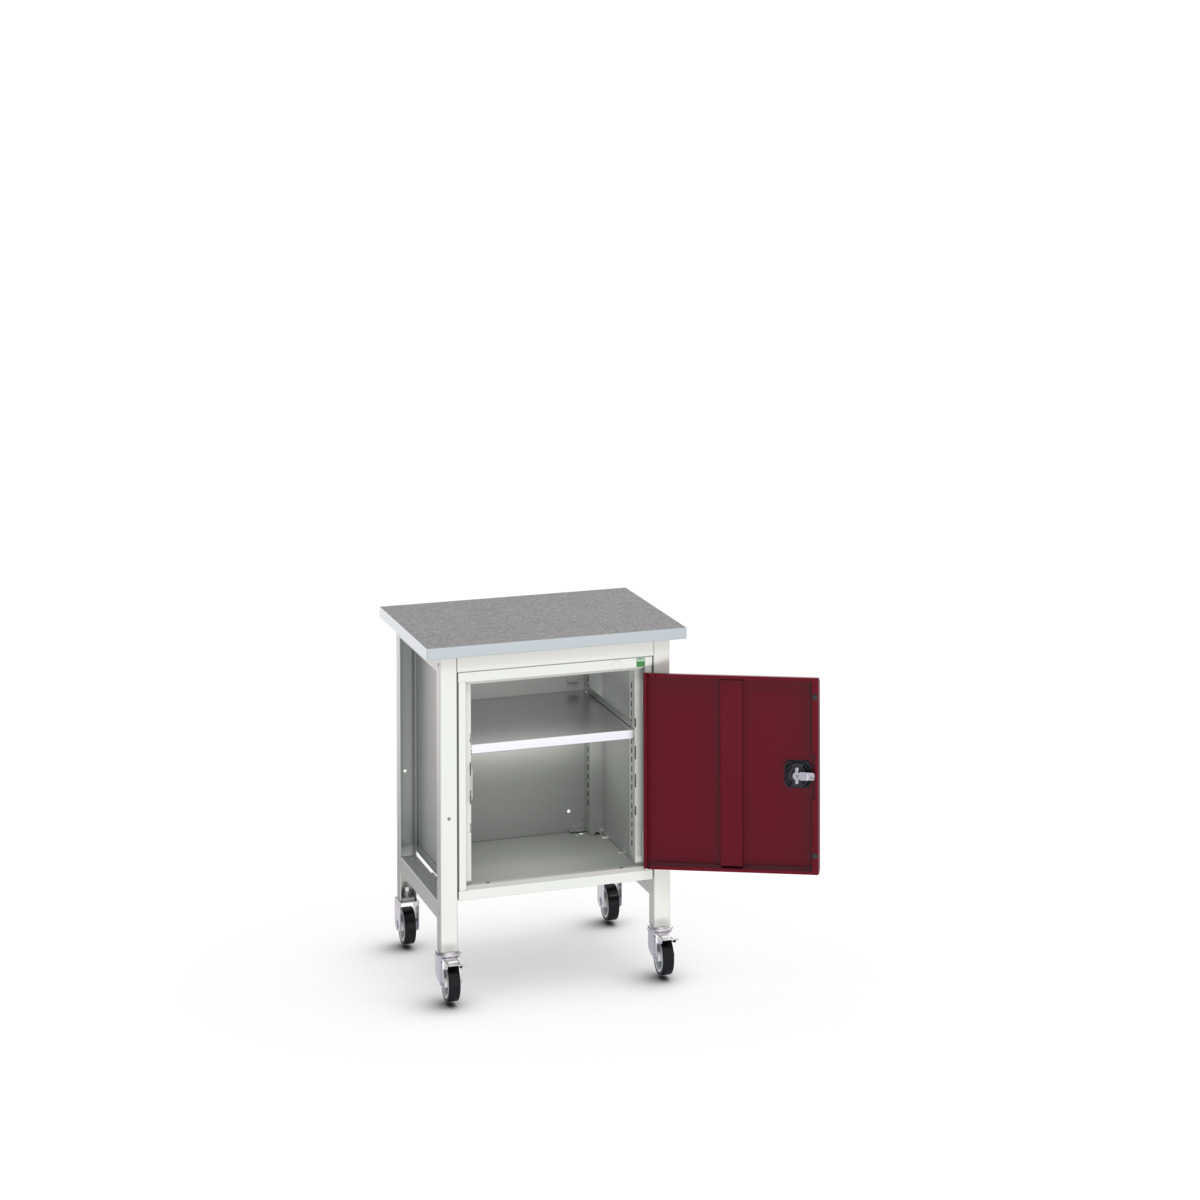 16922203.24 - verso mobile workstand